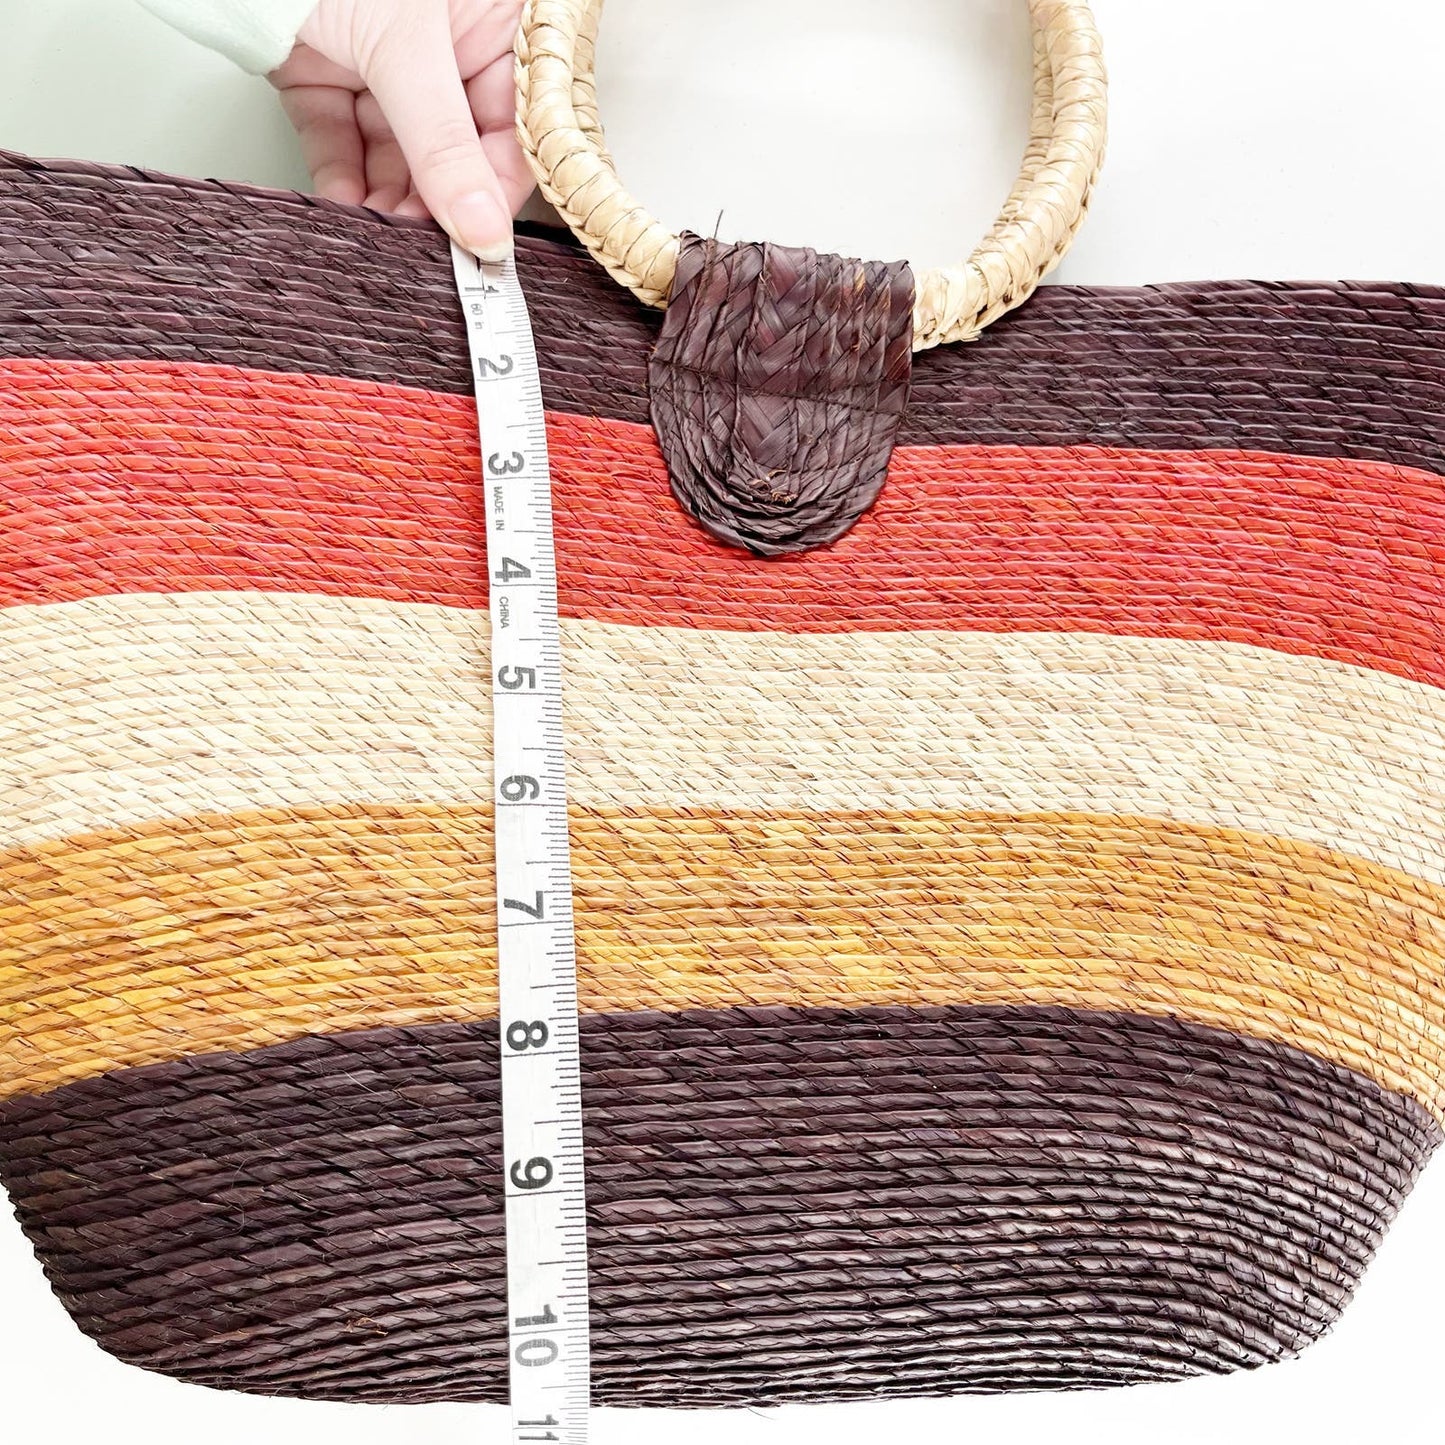 Multicolor Striped Mexico Rattan Woven Straw Wicker Handbag Beach Bag Brown